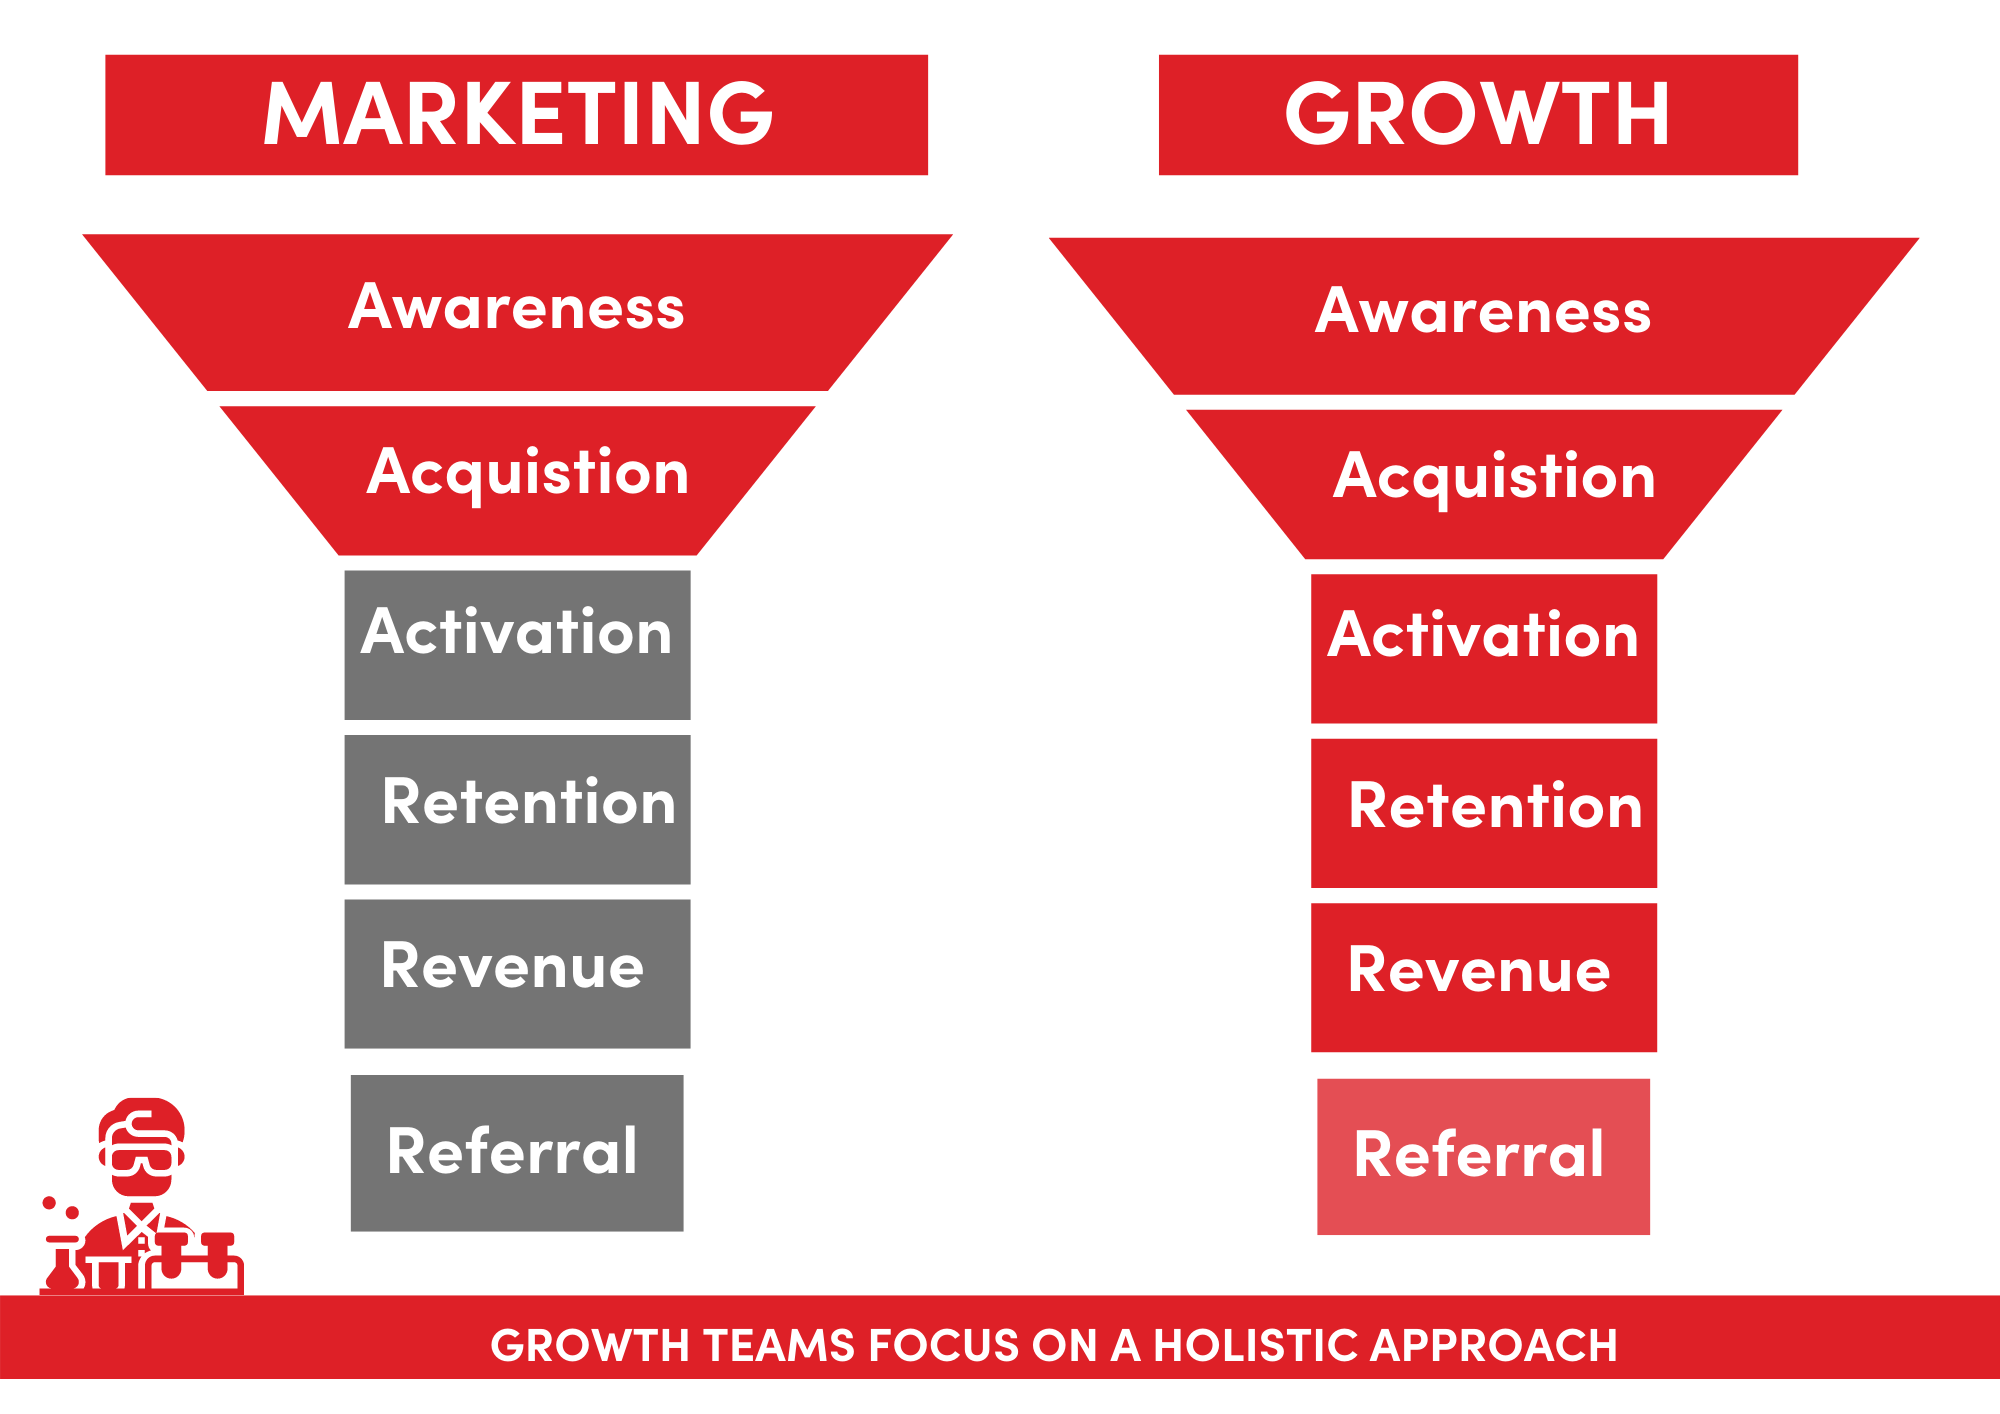 Traditional vs Growth marketing focus 